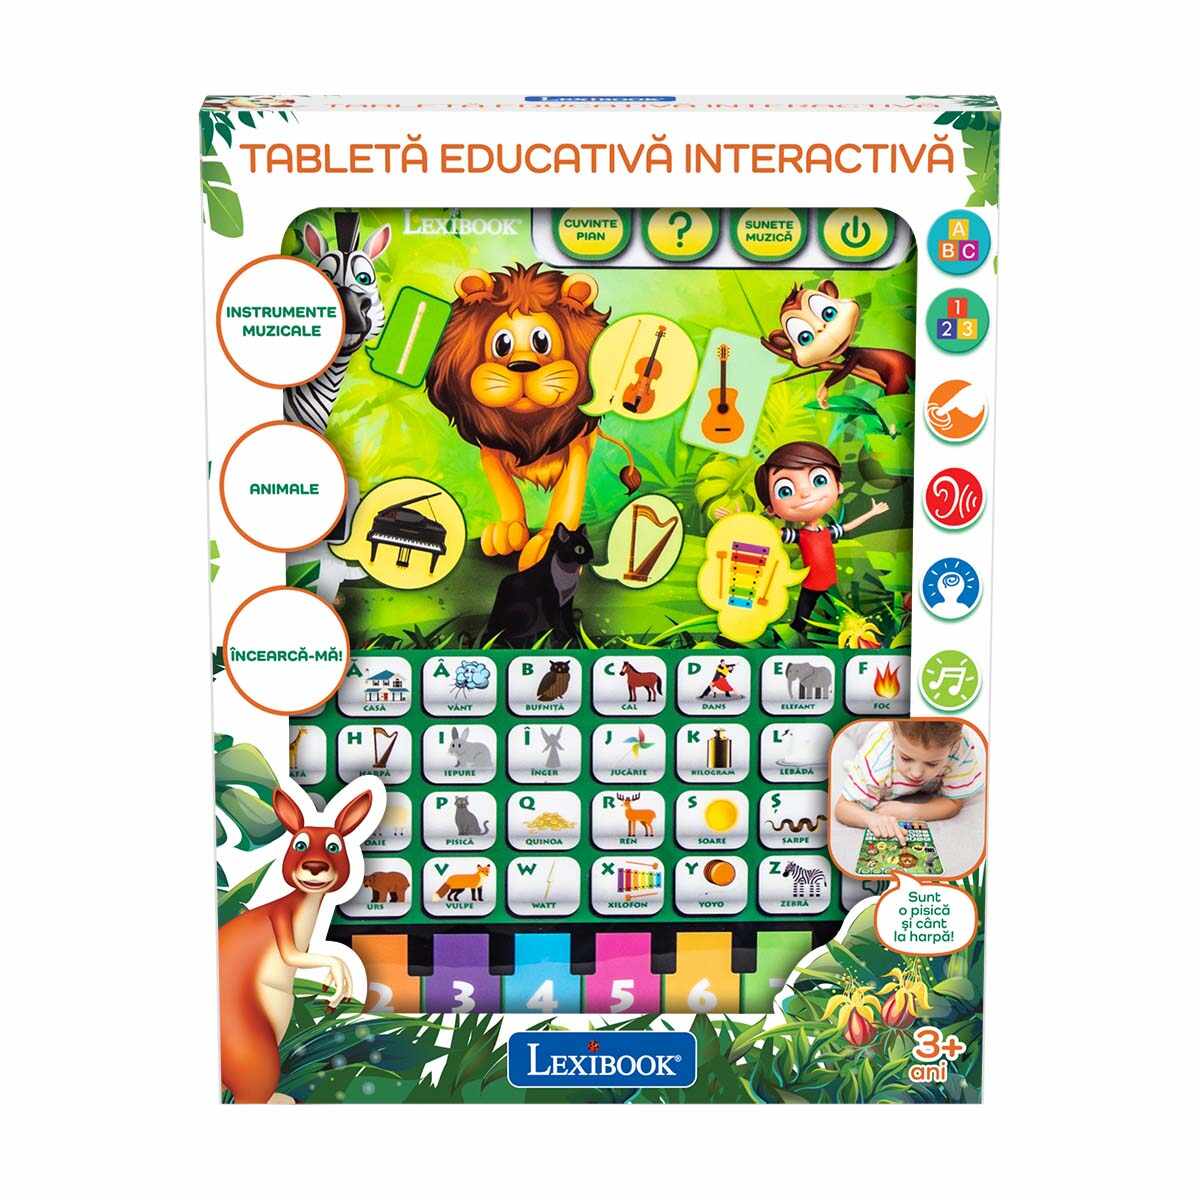 Tableta educativa interactiva Lexibook, RO